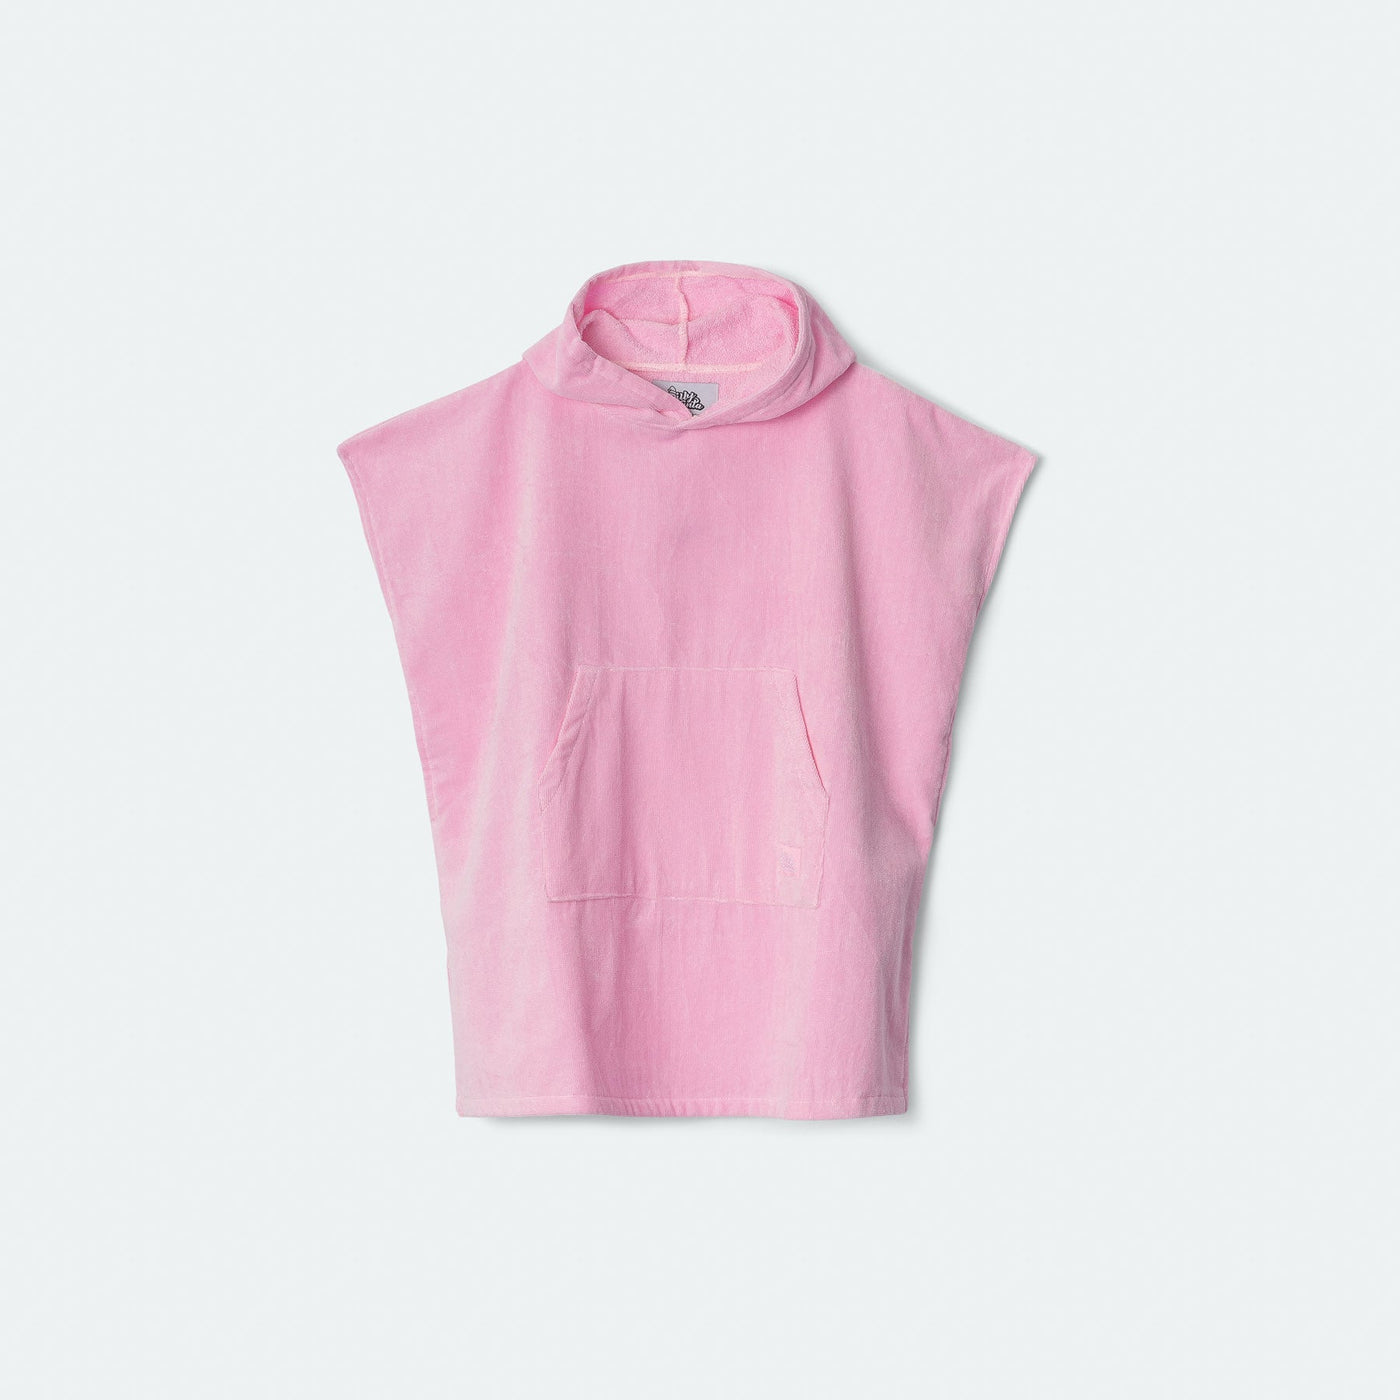 Kaugummi-Pinker Towel Poncho Kinder